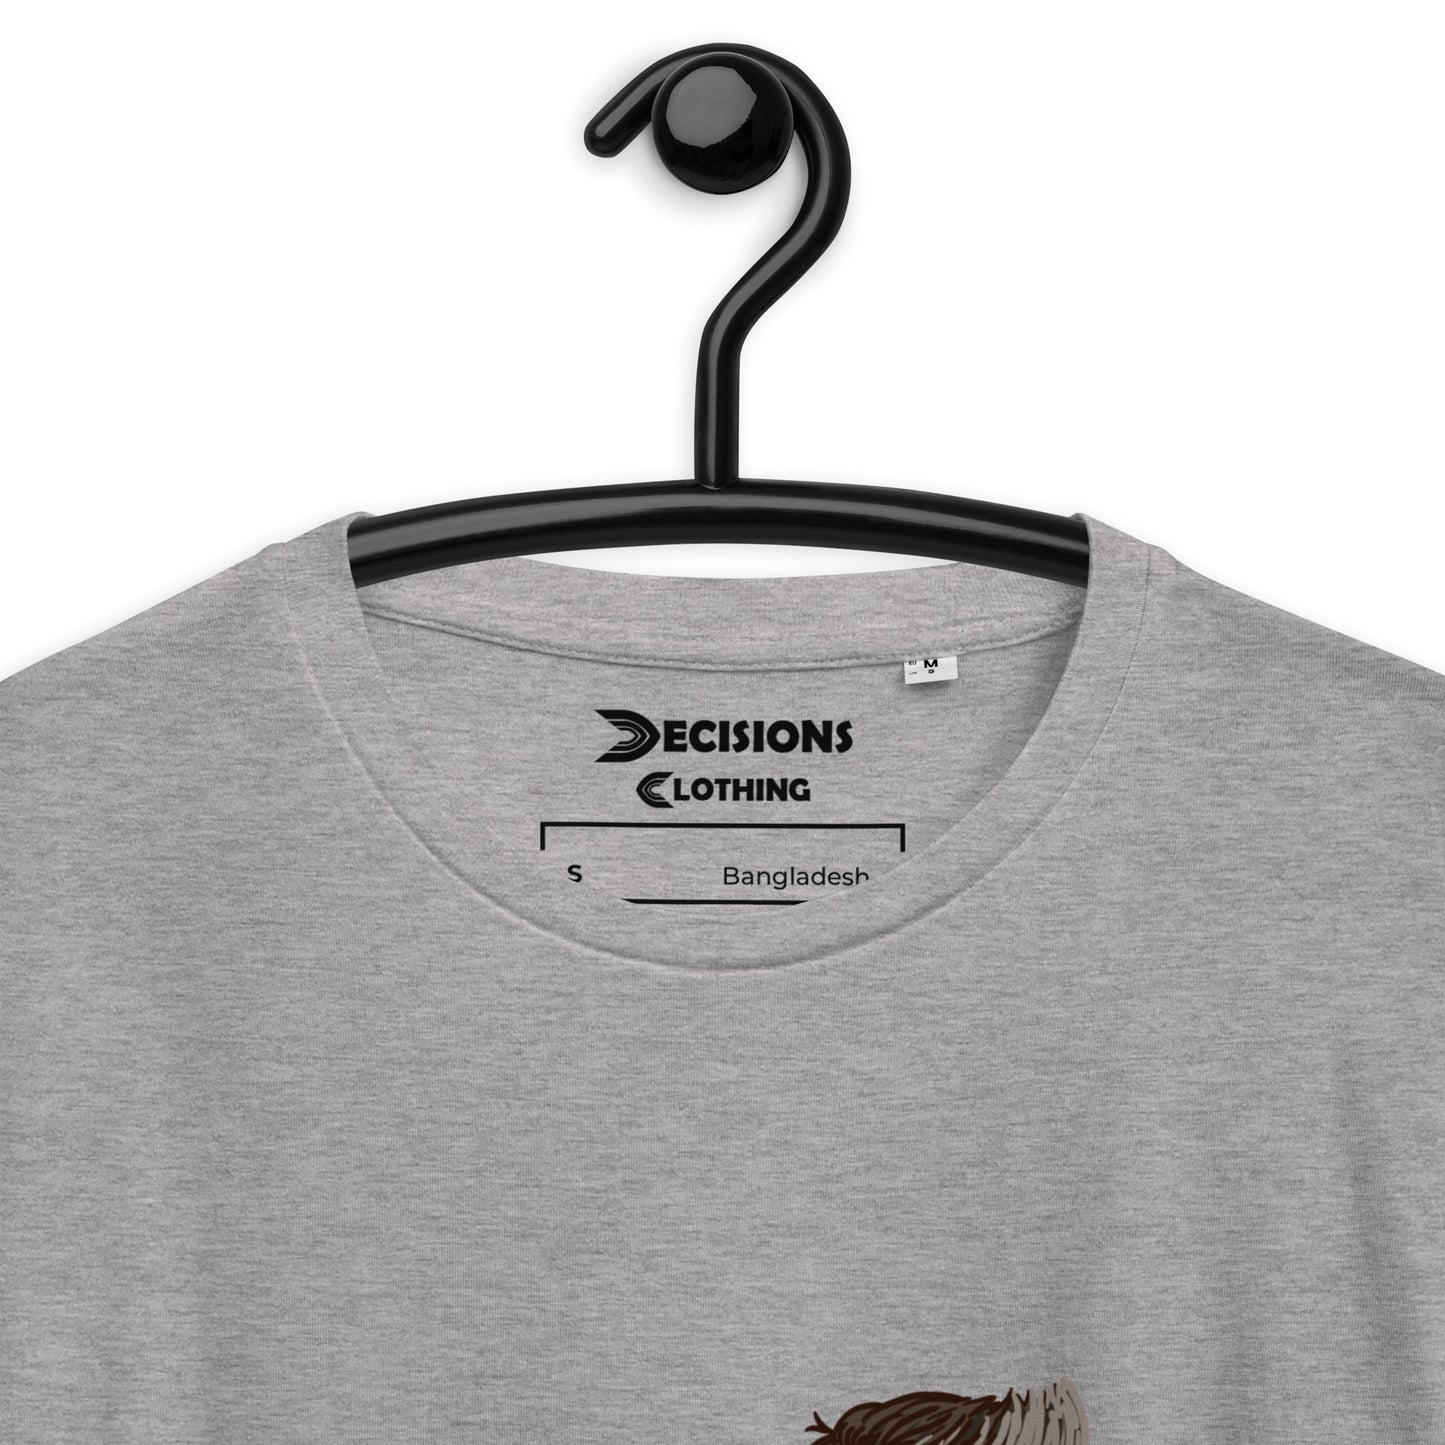 Fuse Nessie T-Shirt (Apex Legends)